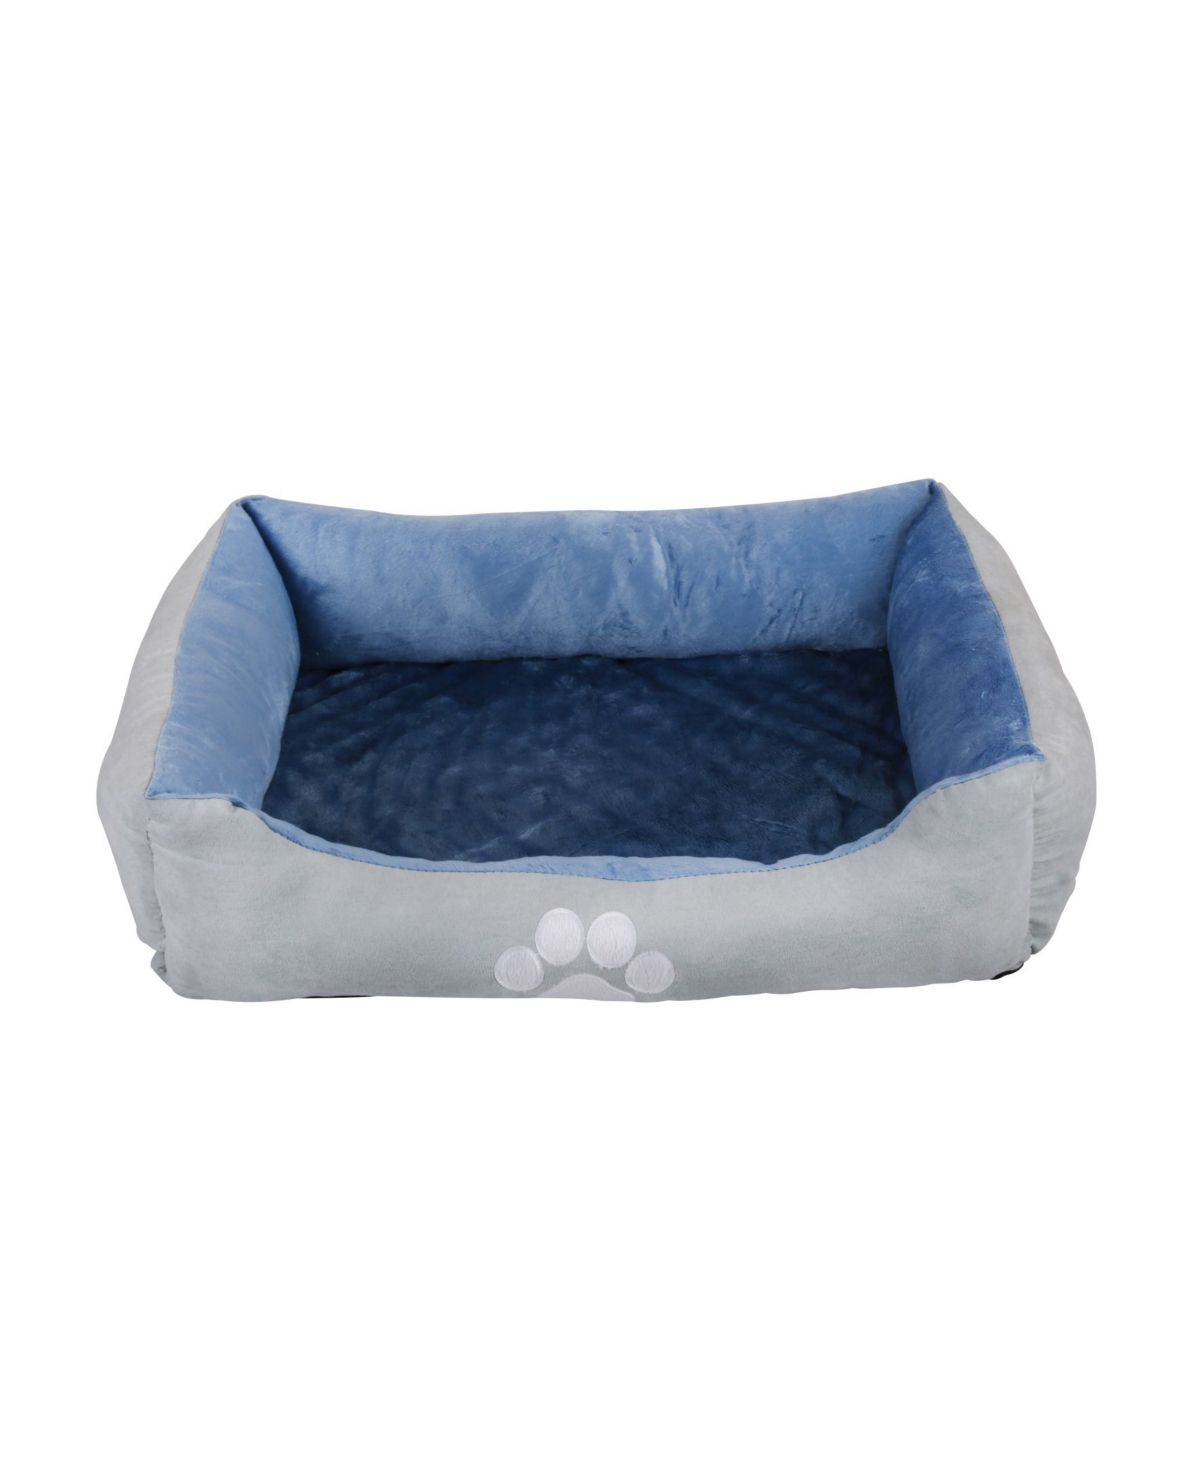 Happycare Textiles Orthopedic Rectangle Bolster Pet Bed, Dog Bed, Super Soft Plush - Blue